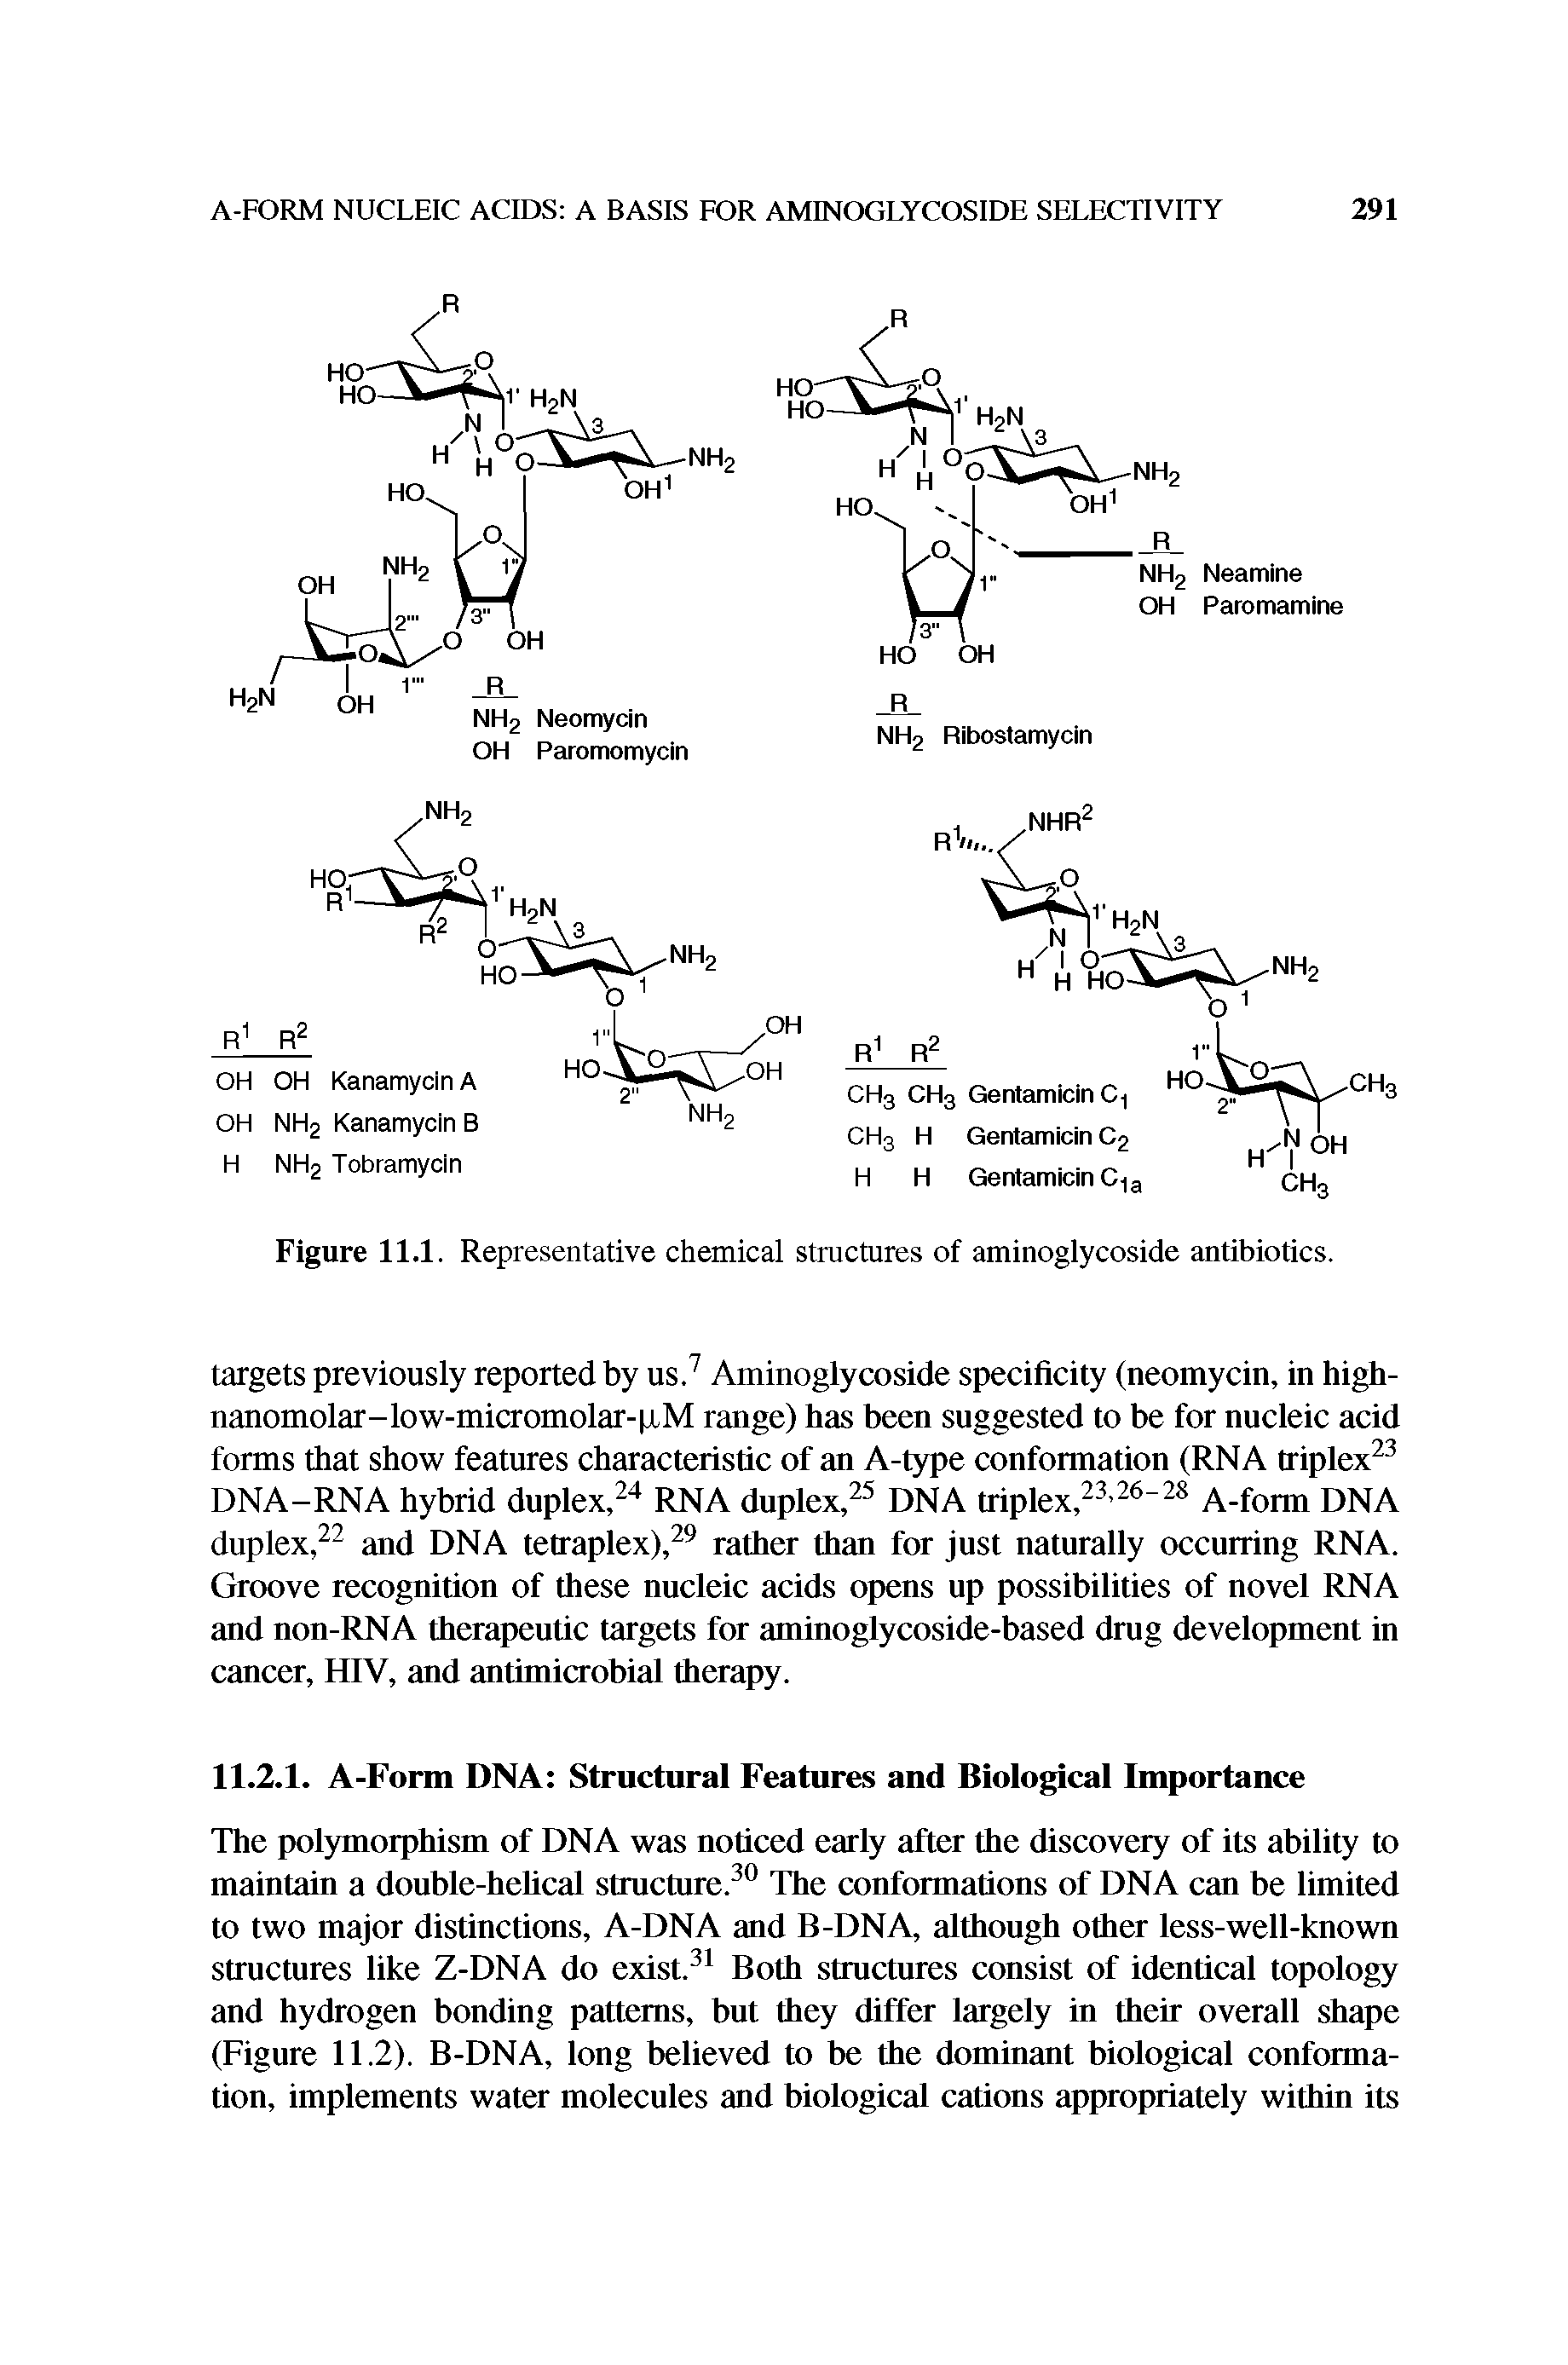 Figure 11.1. Representative chemical structures of aminoglycoside antibiotics.